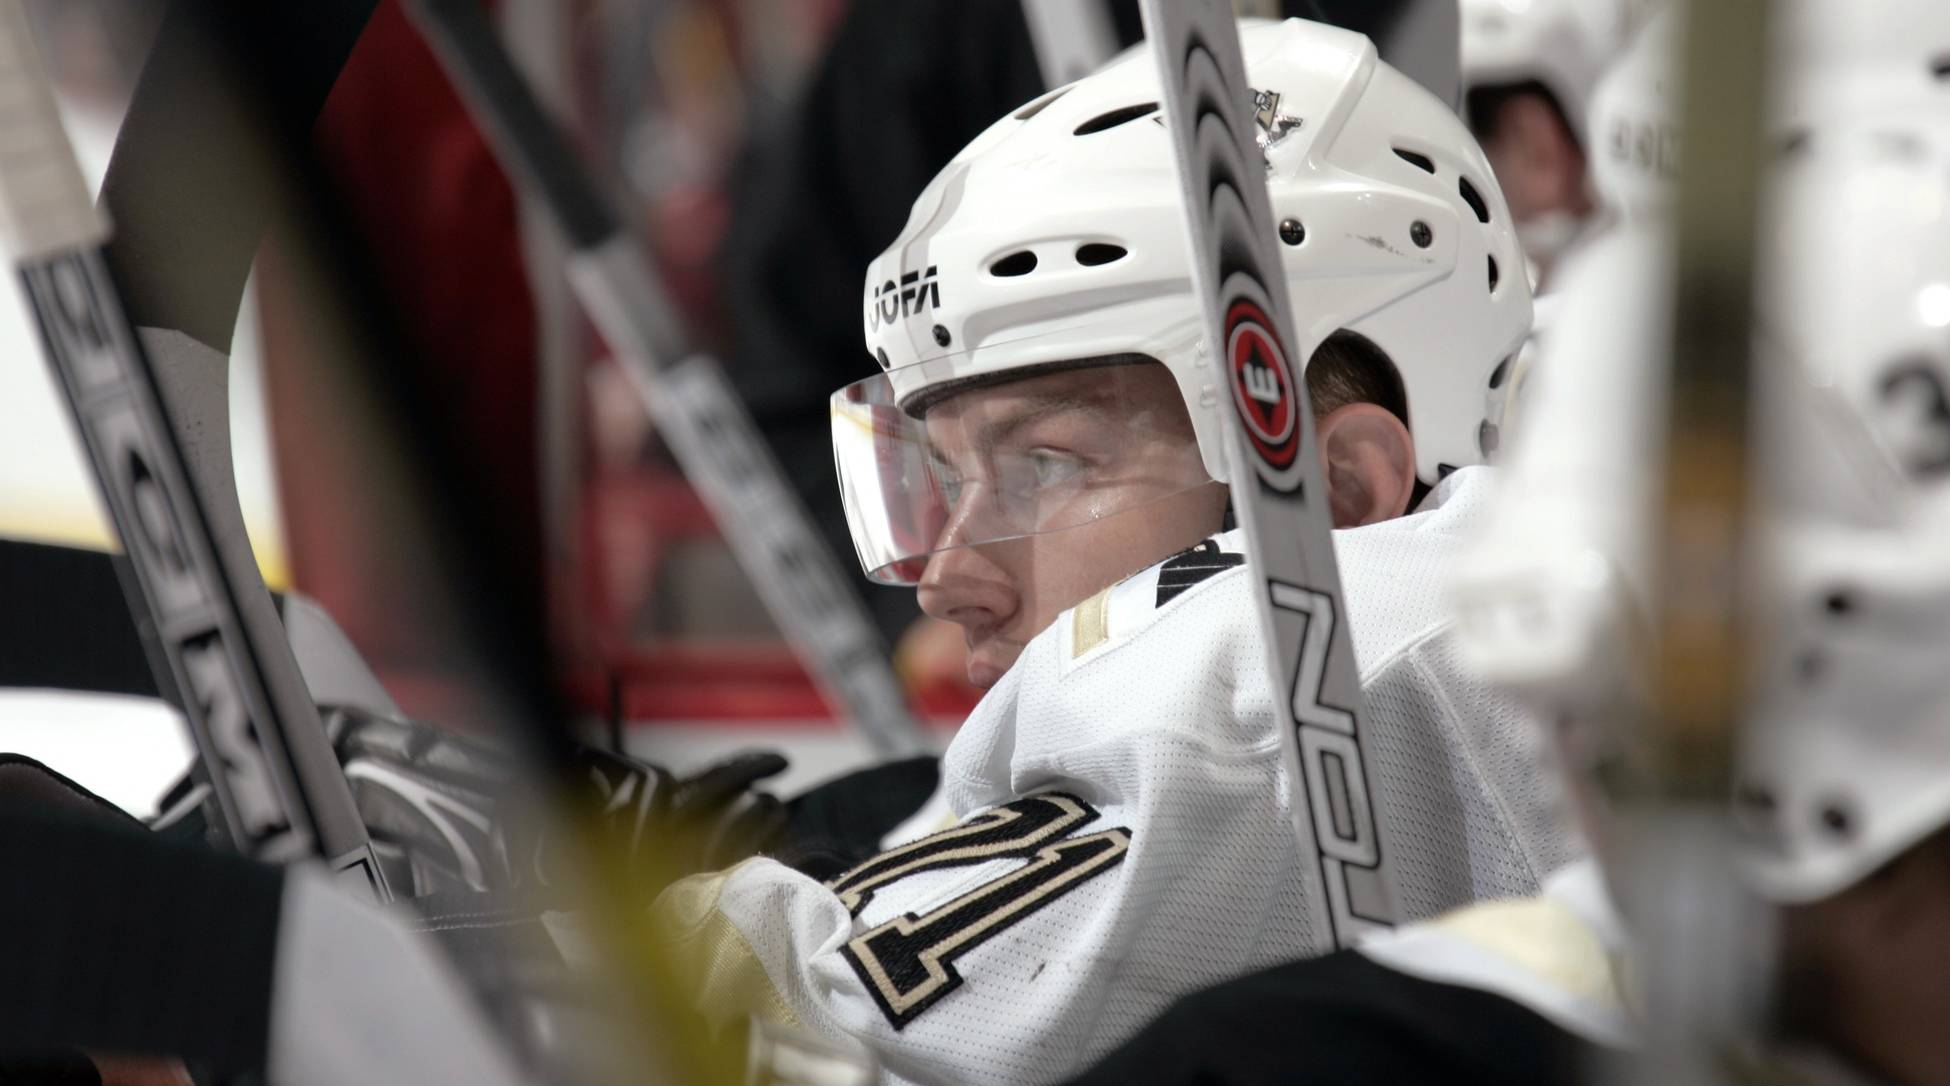 Former Penguins winger Konstantin Koltsov looks on from the bench during a game.